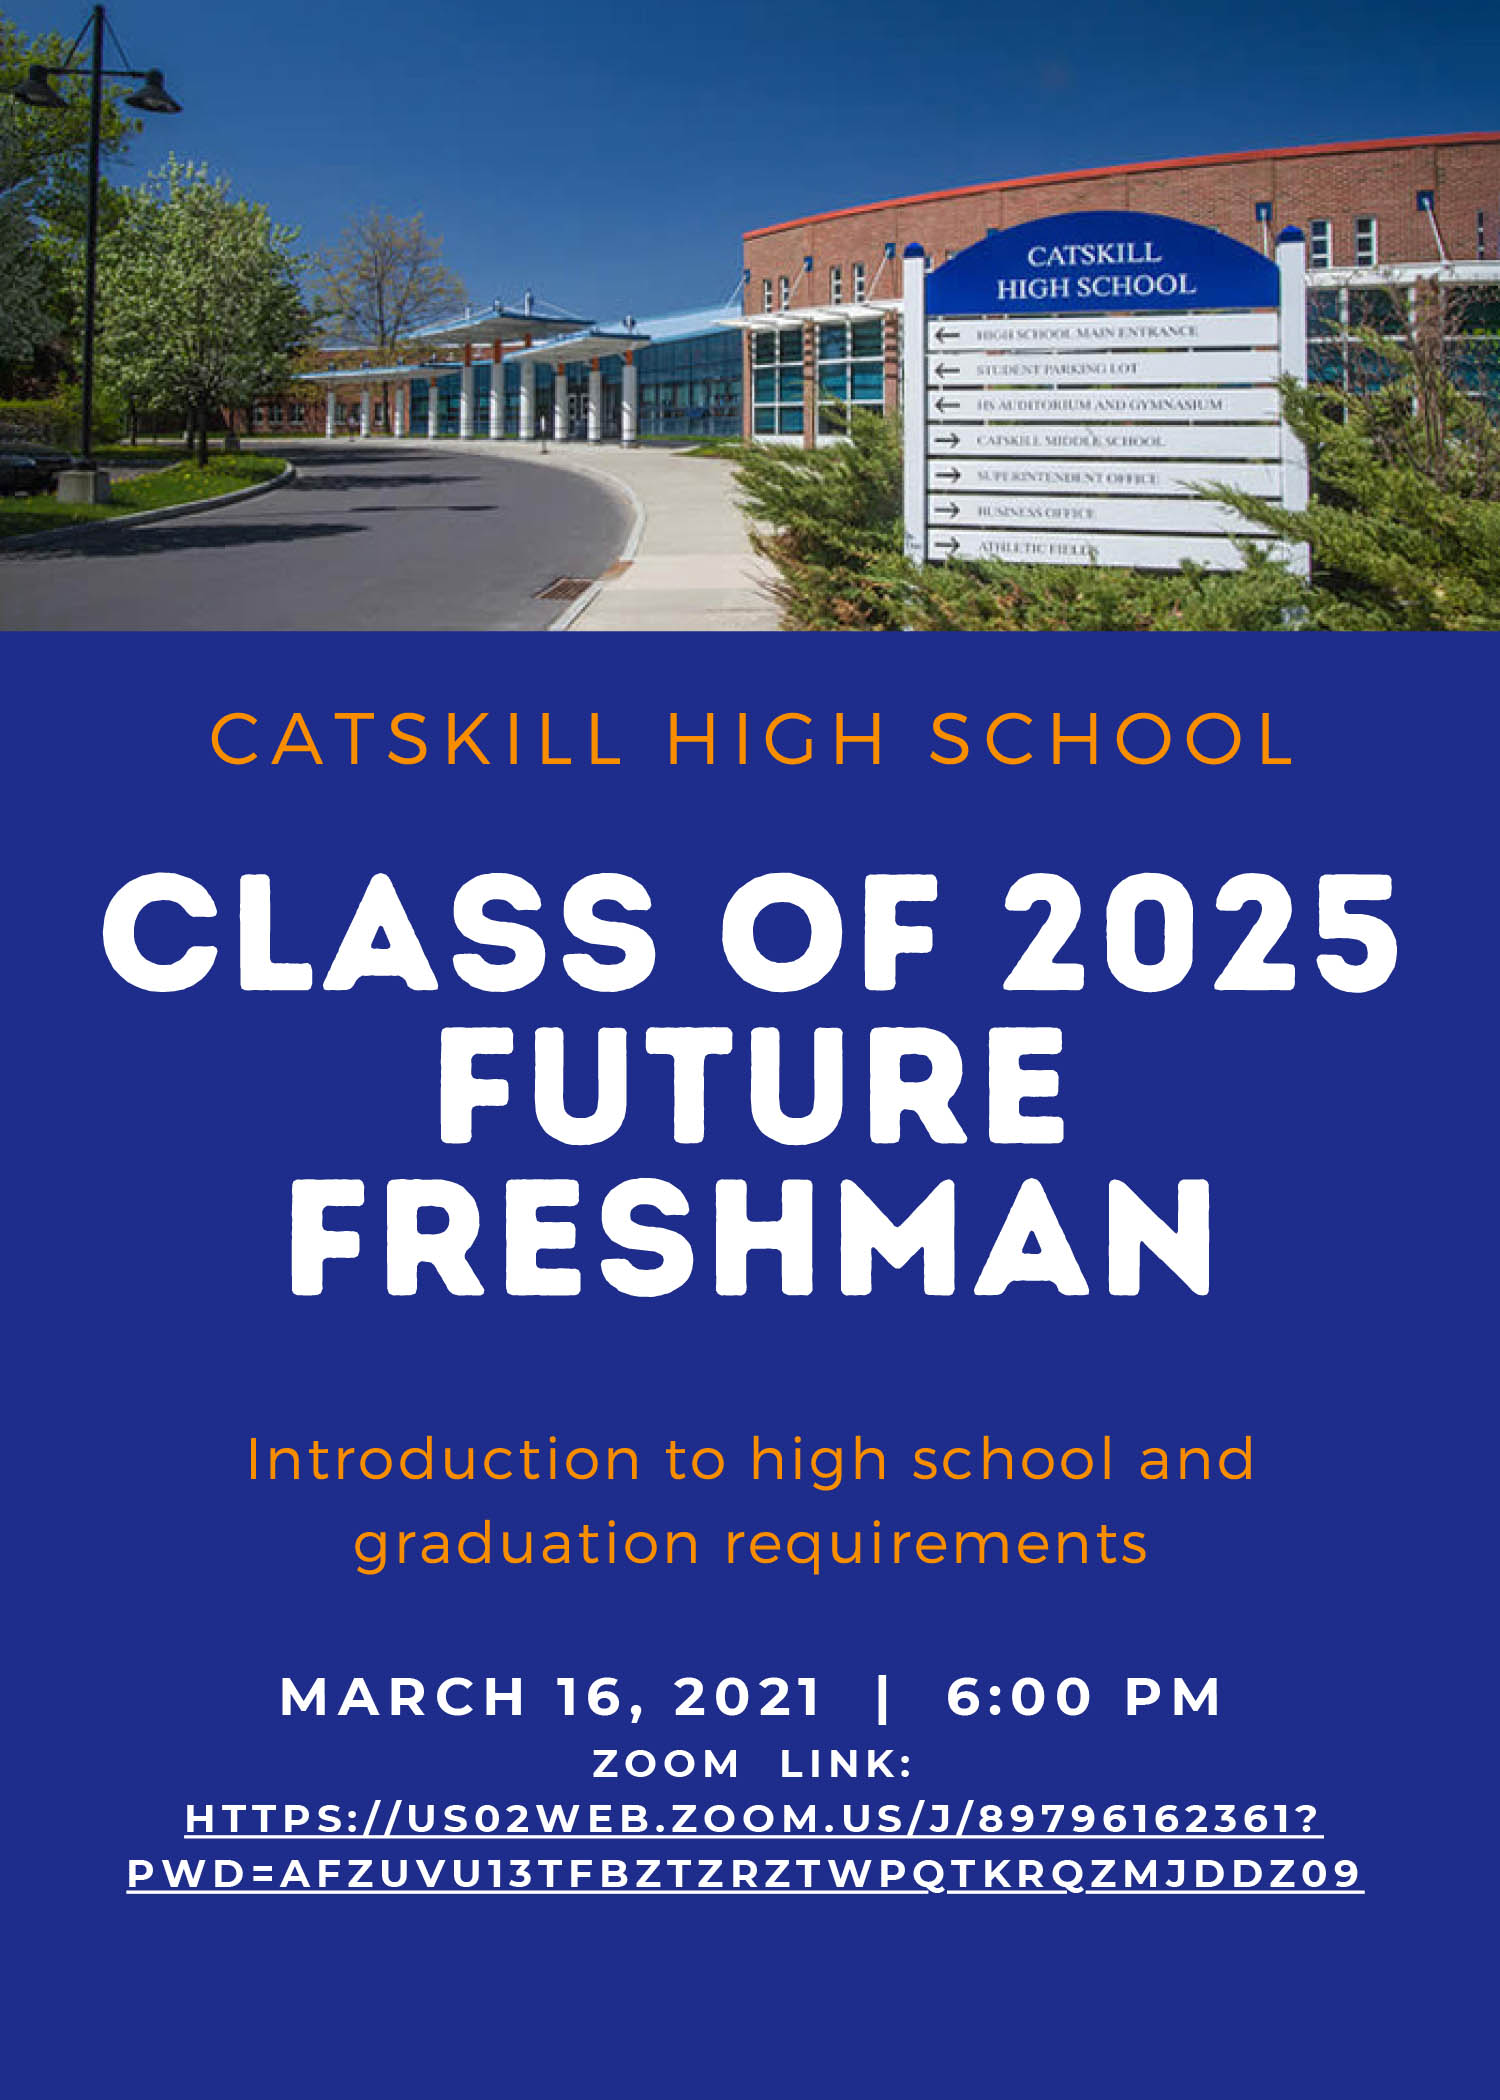 Future Freshman Night Flyer with image of Catskill High School